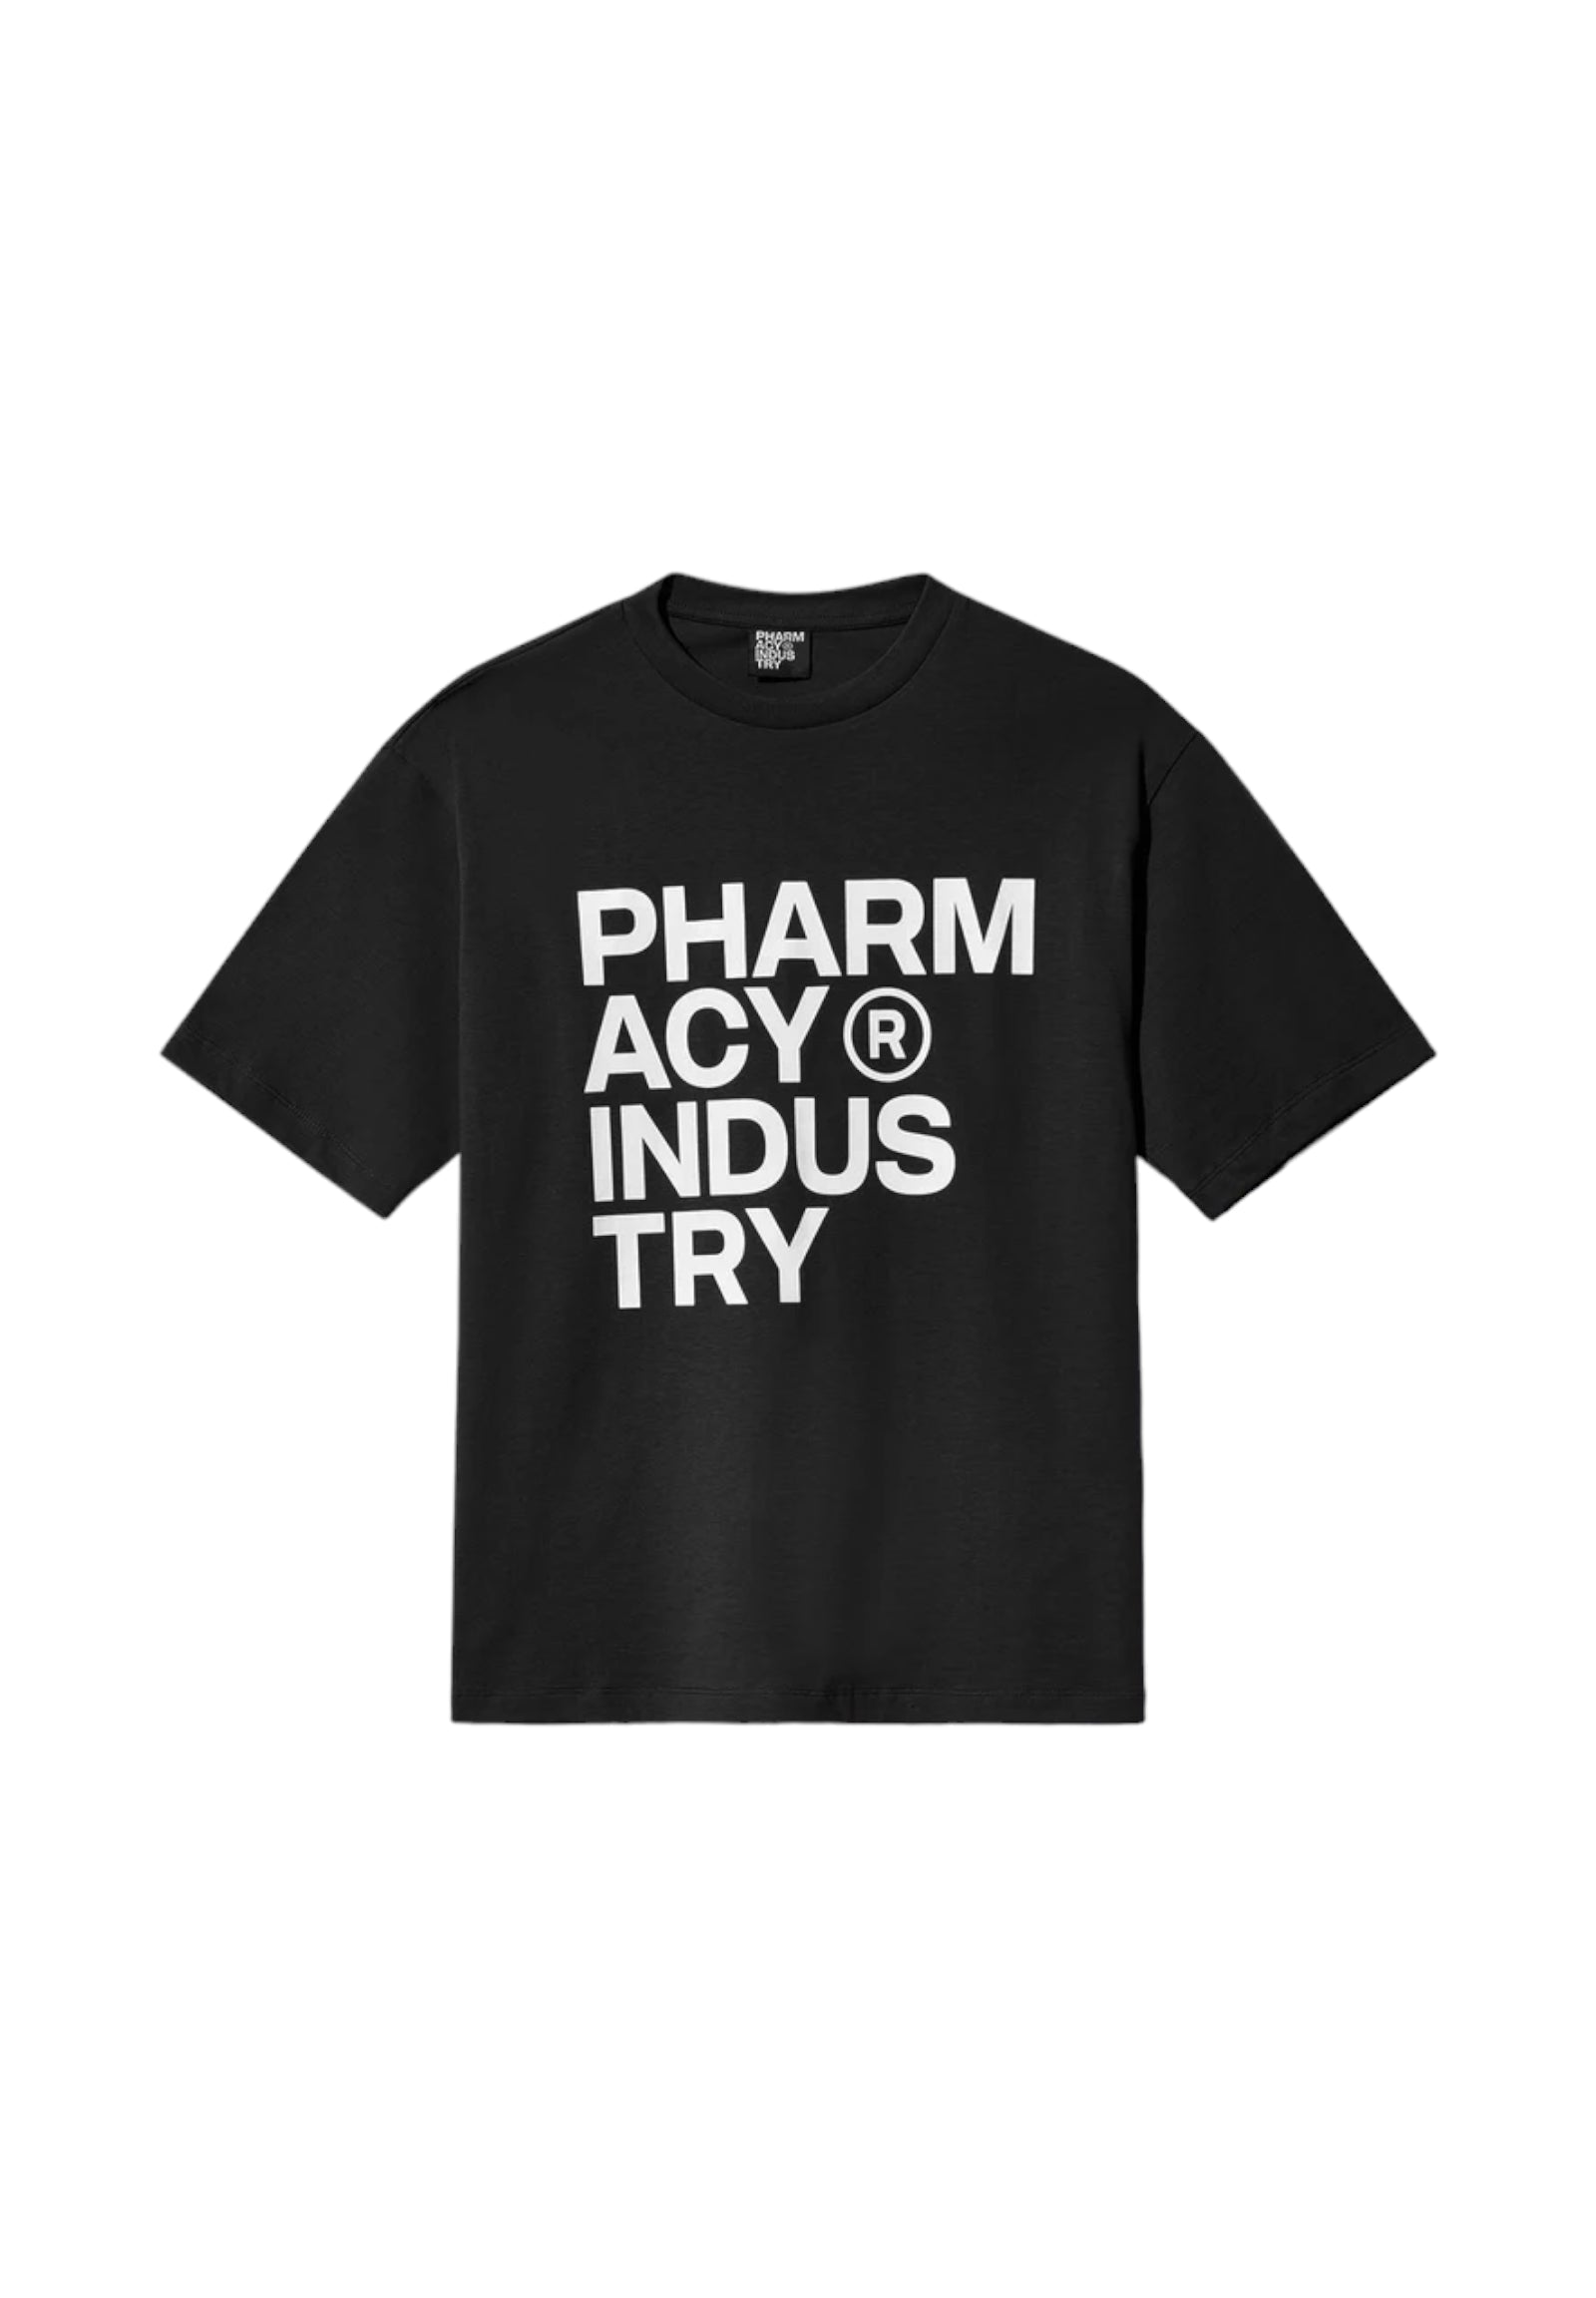 Pharmacy Industry T-Shirt A Maniche Corte Phabm00003 Nero